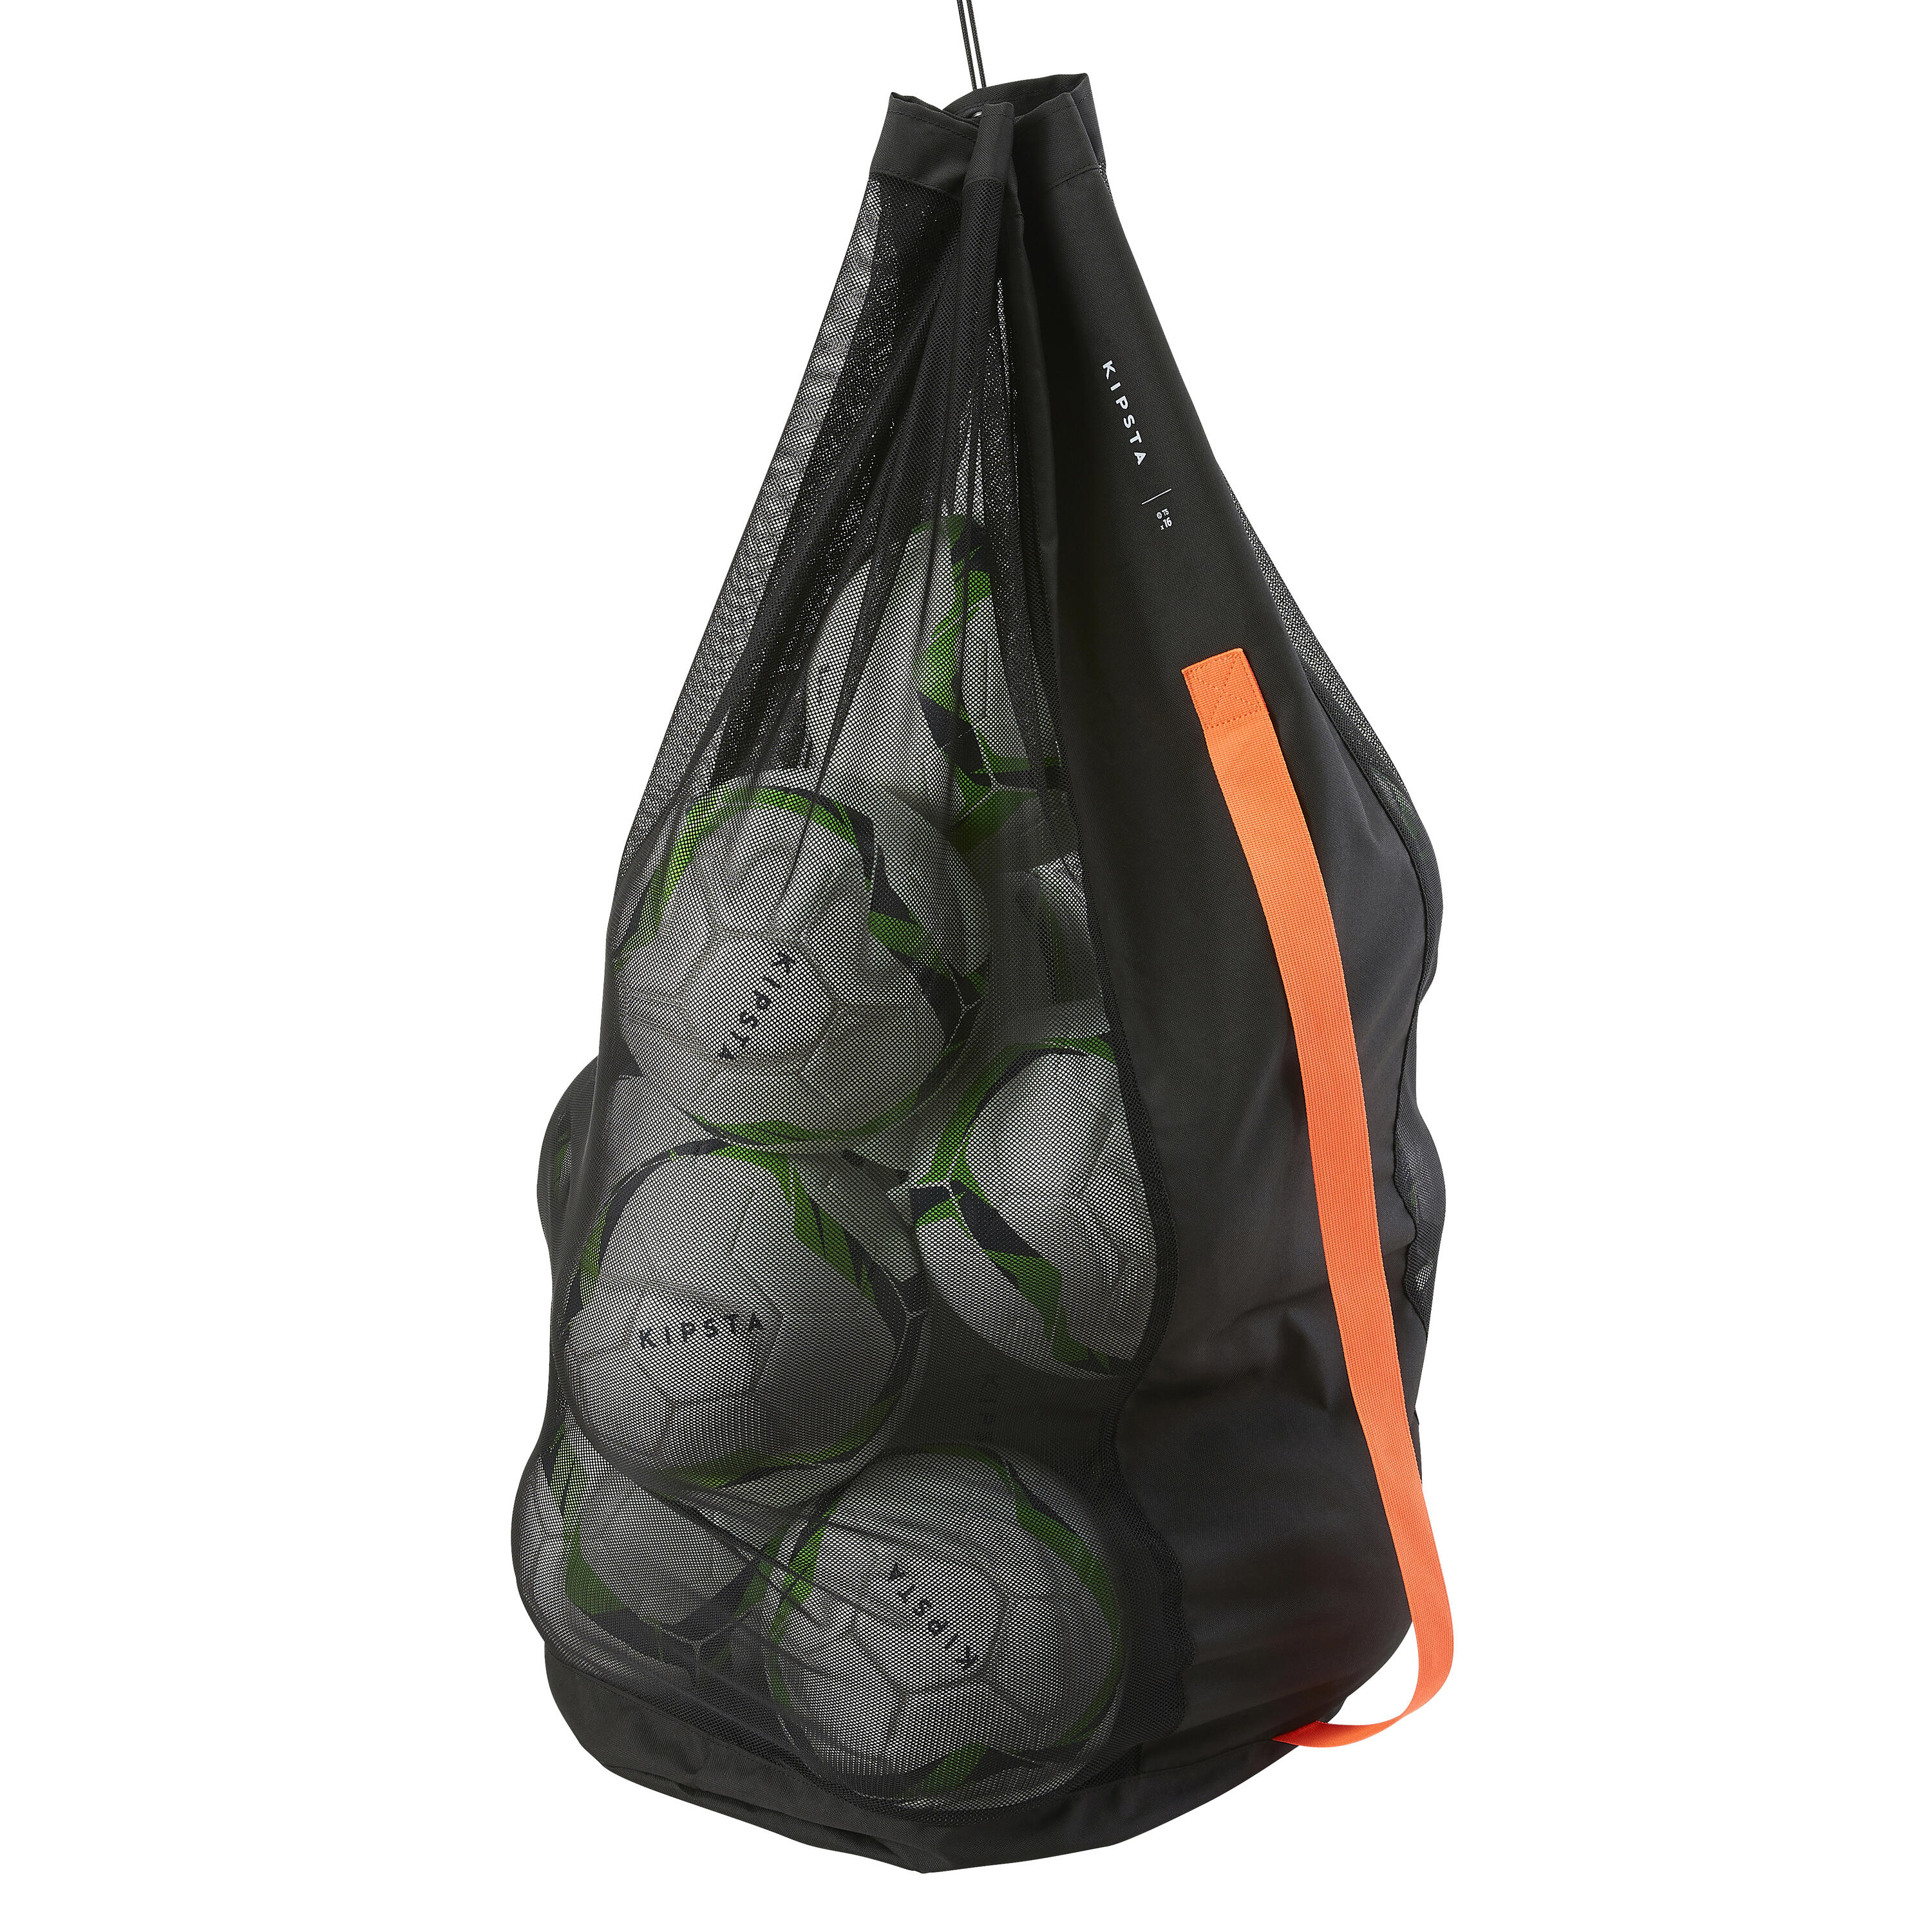 Football Pumps and Ball Bags